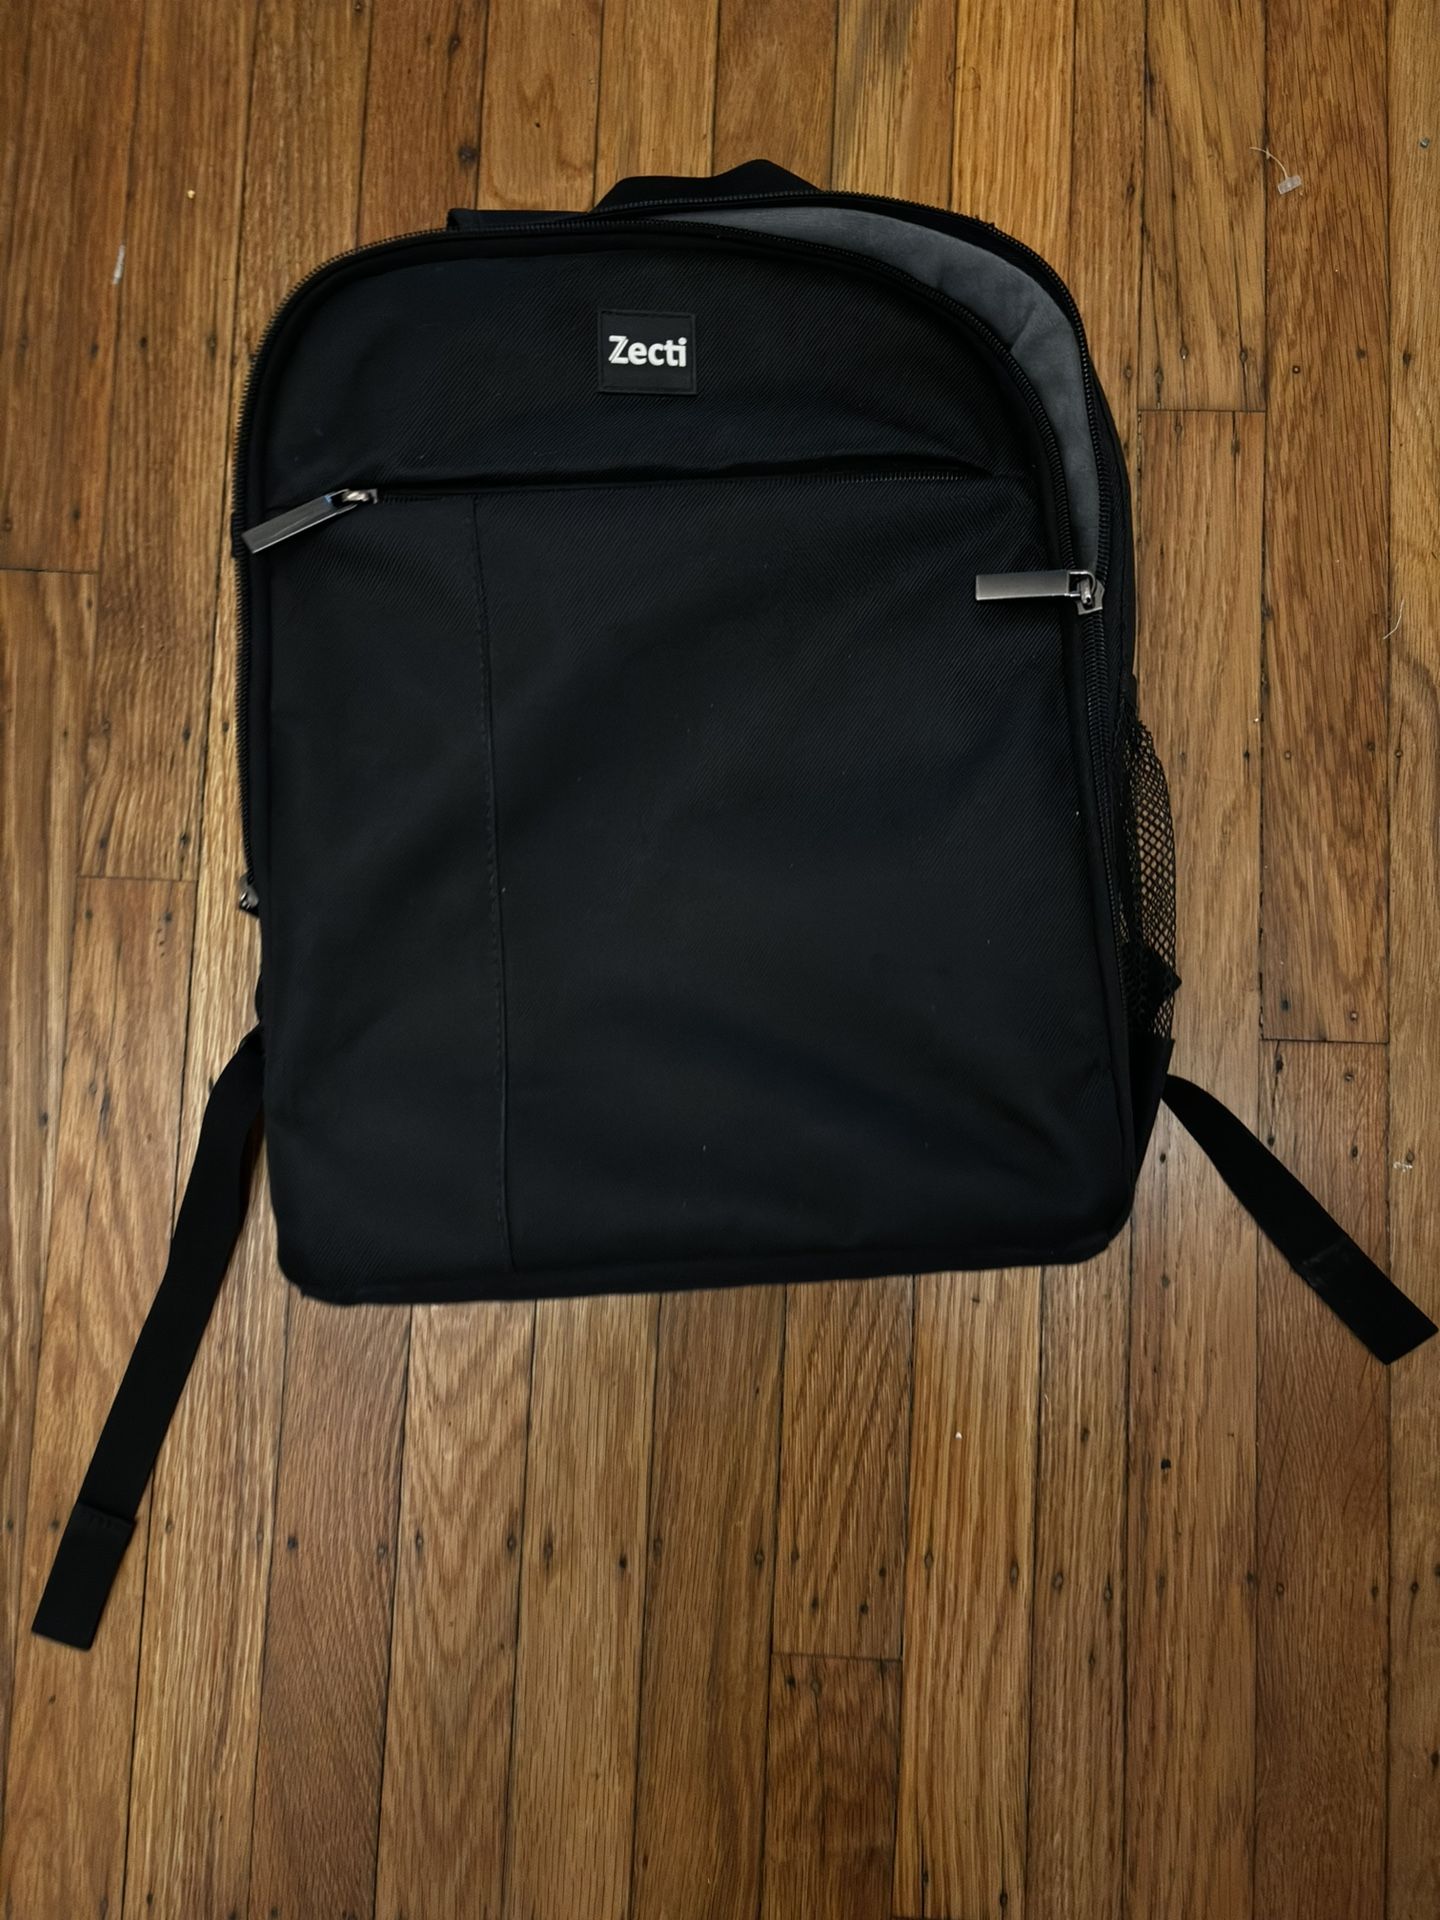 Zecti Laptop/camera backpack